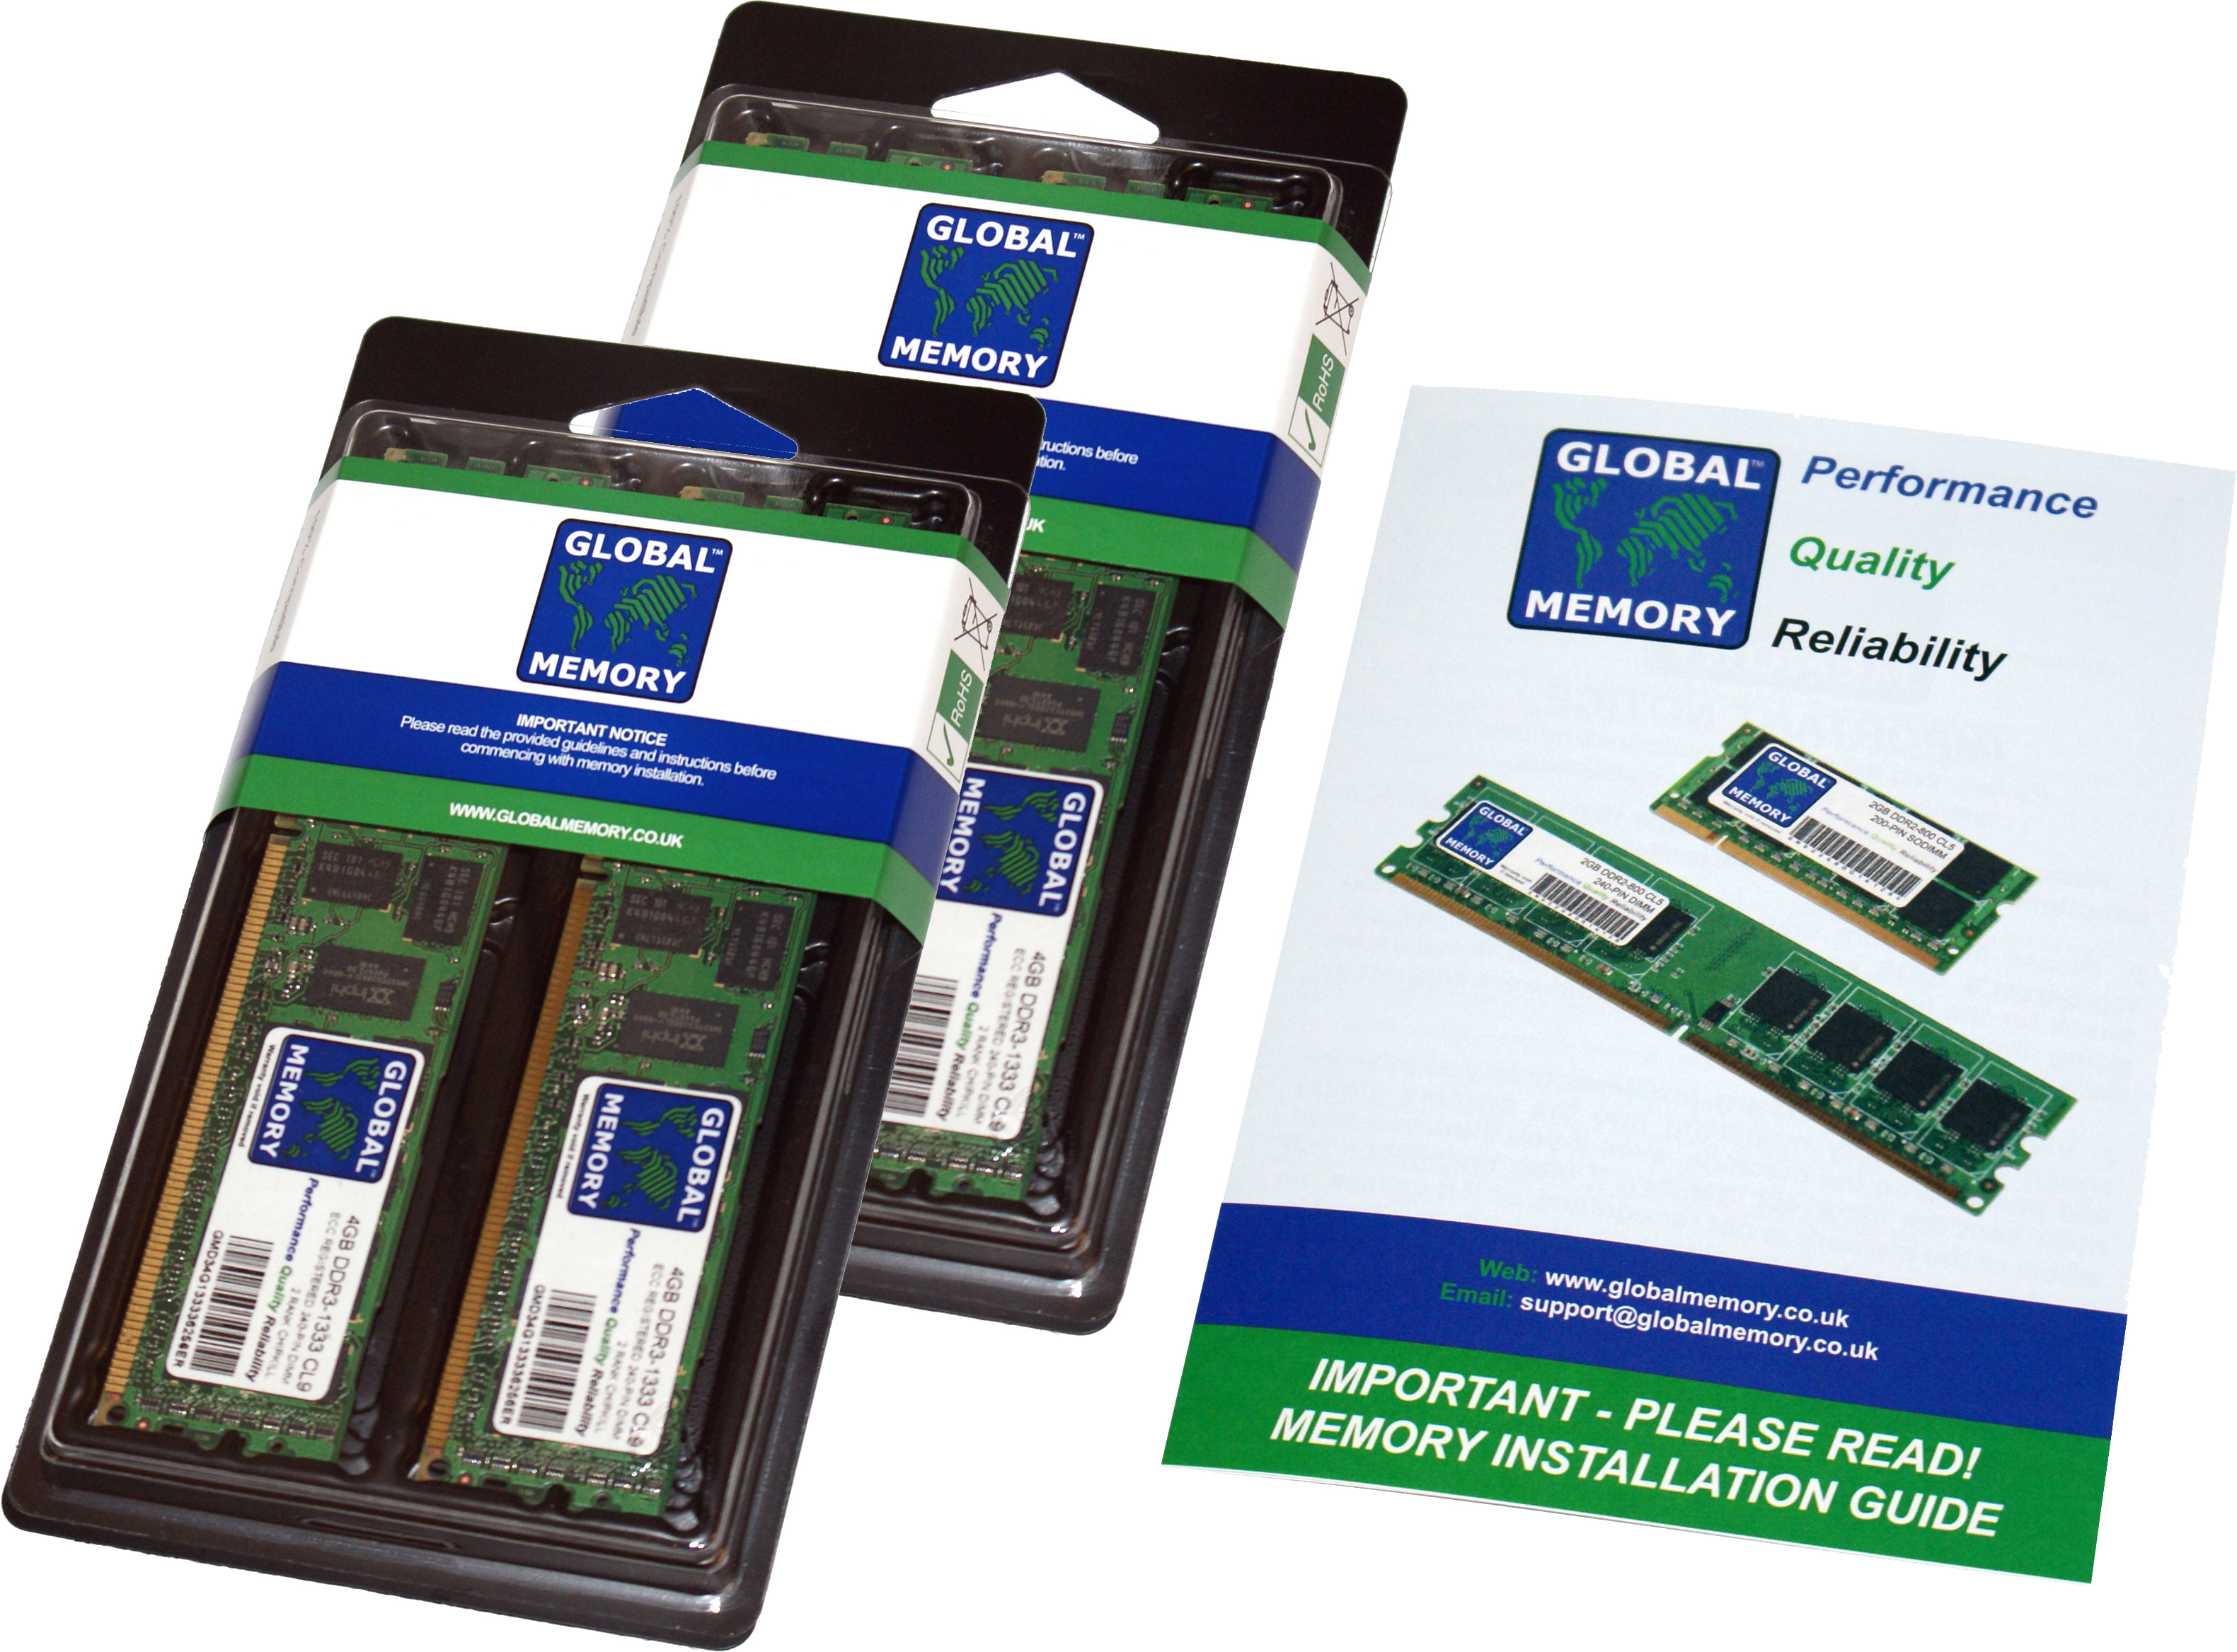 128GB (4 x 32GB) DDR4 2400MHz PC4-19200 288-PIN ECC REGISTERED DIMM (RDIMM) MEMORY RAM KIT FOR DELL SERVERS/WORKSTATIONS (8 RANK KIT CHIPKILL)